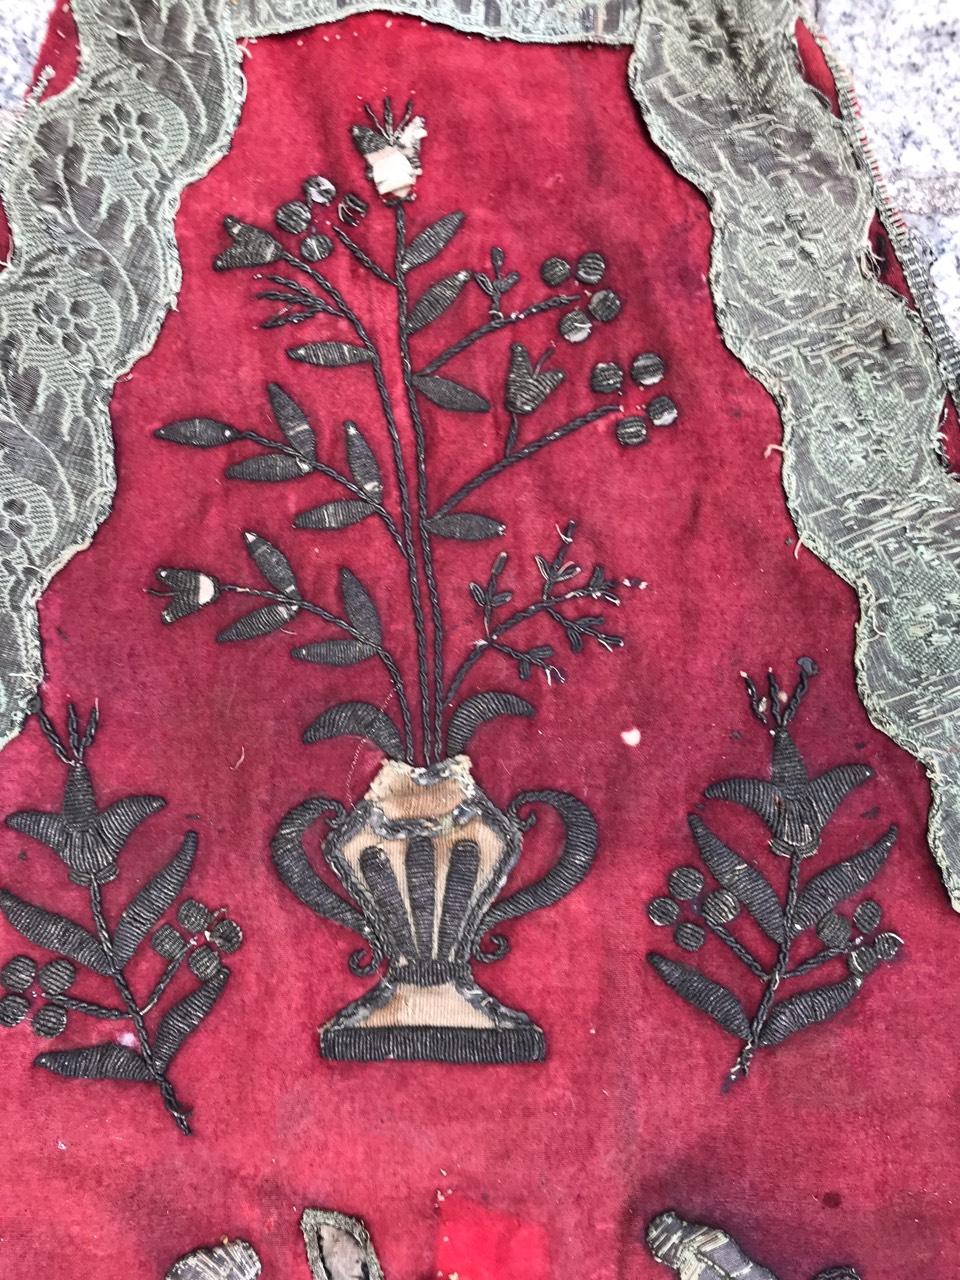 Aubusson Antique Religious Embroidery